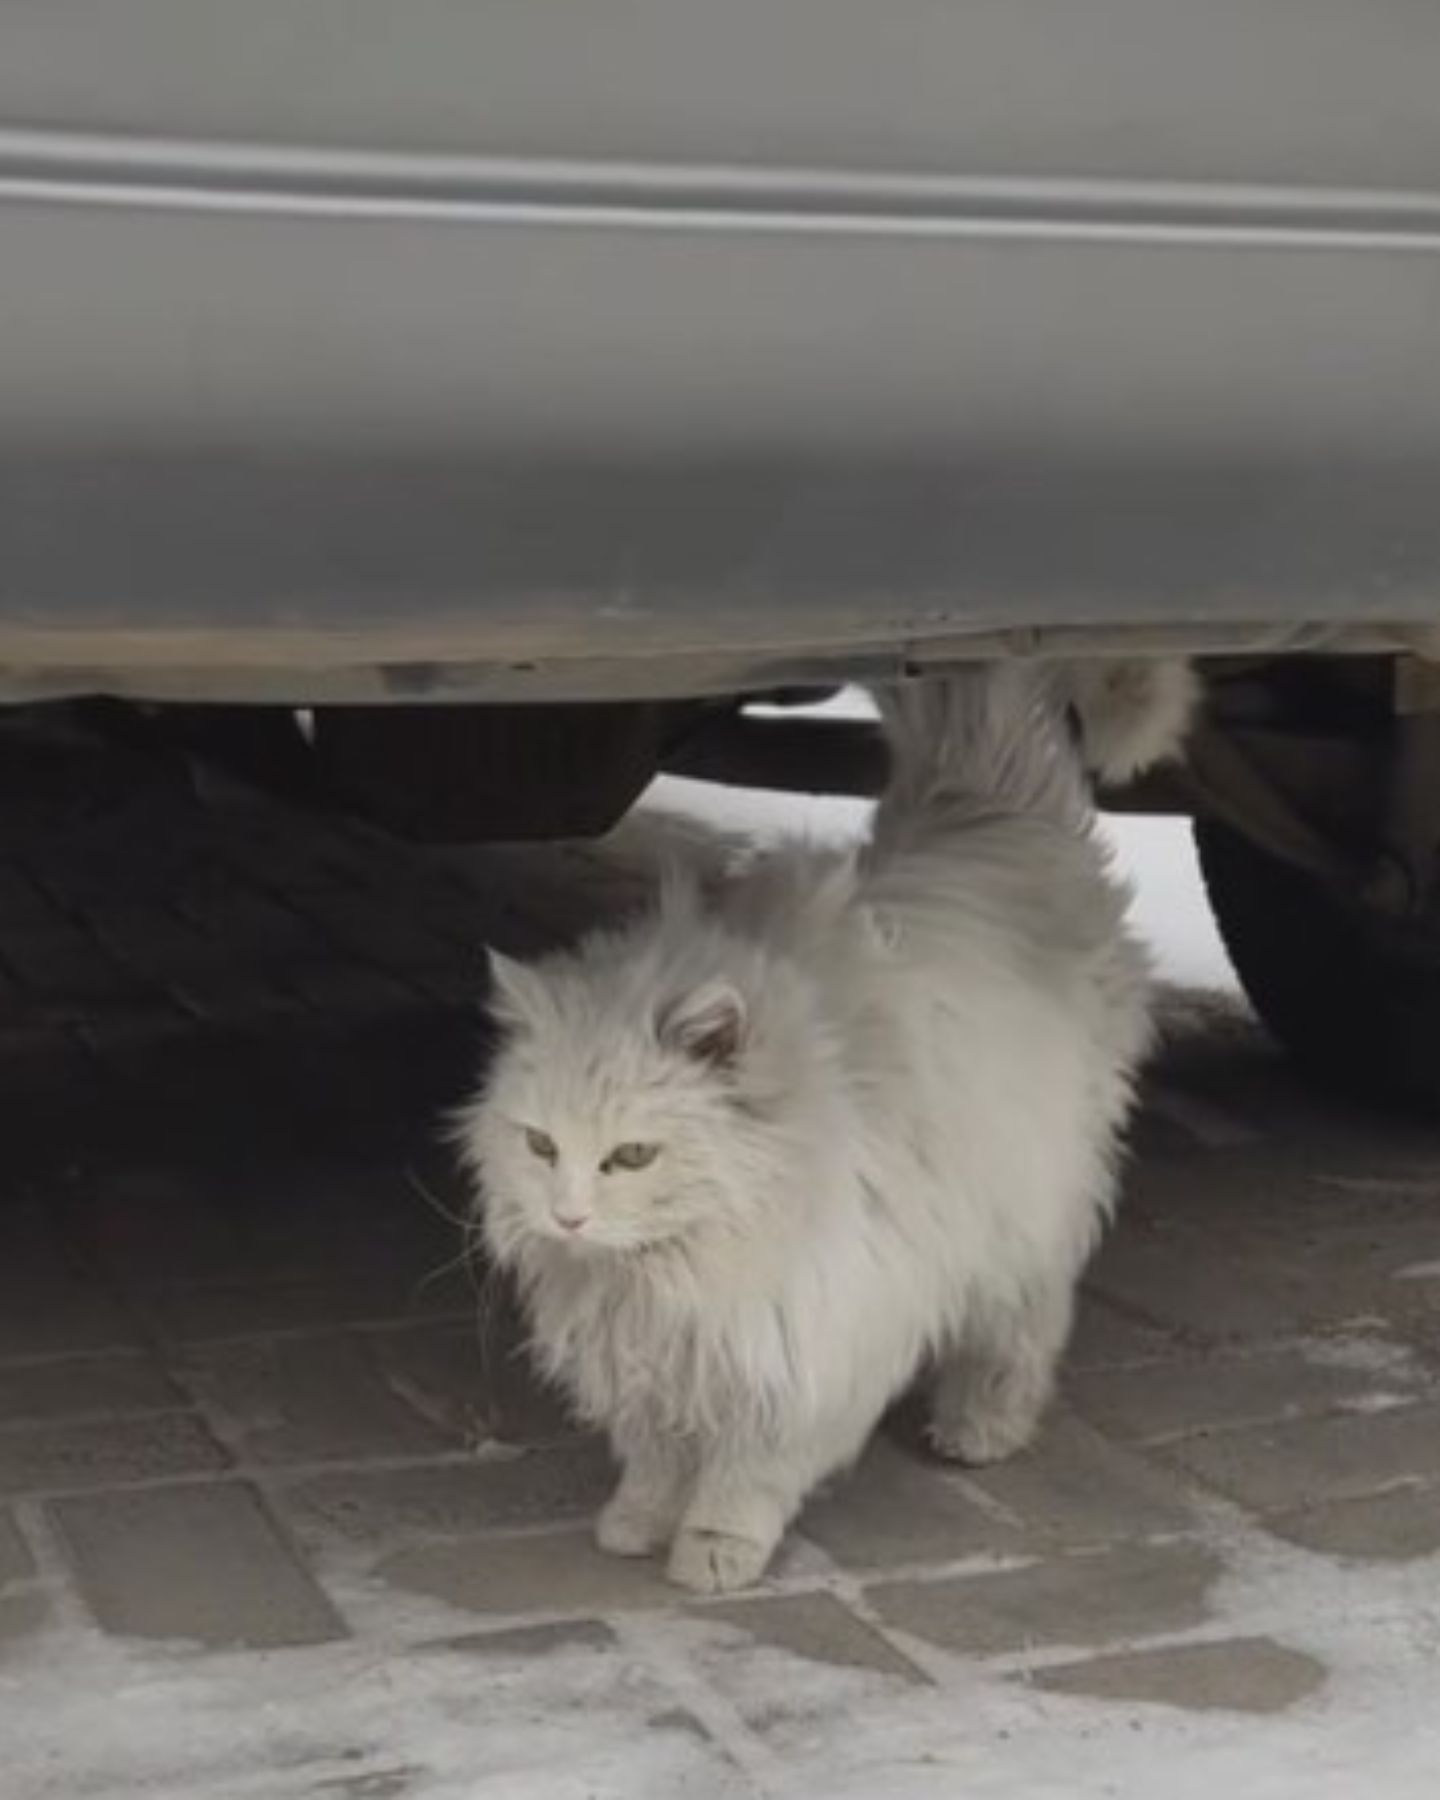 stray cat under a car